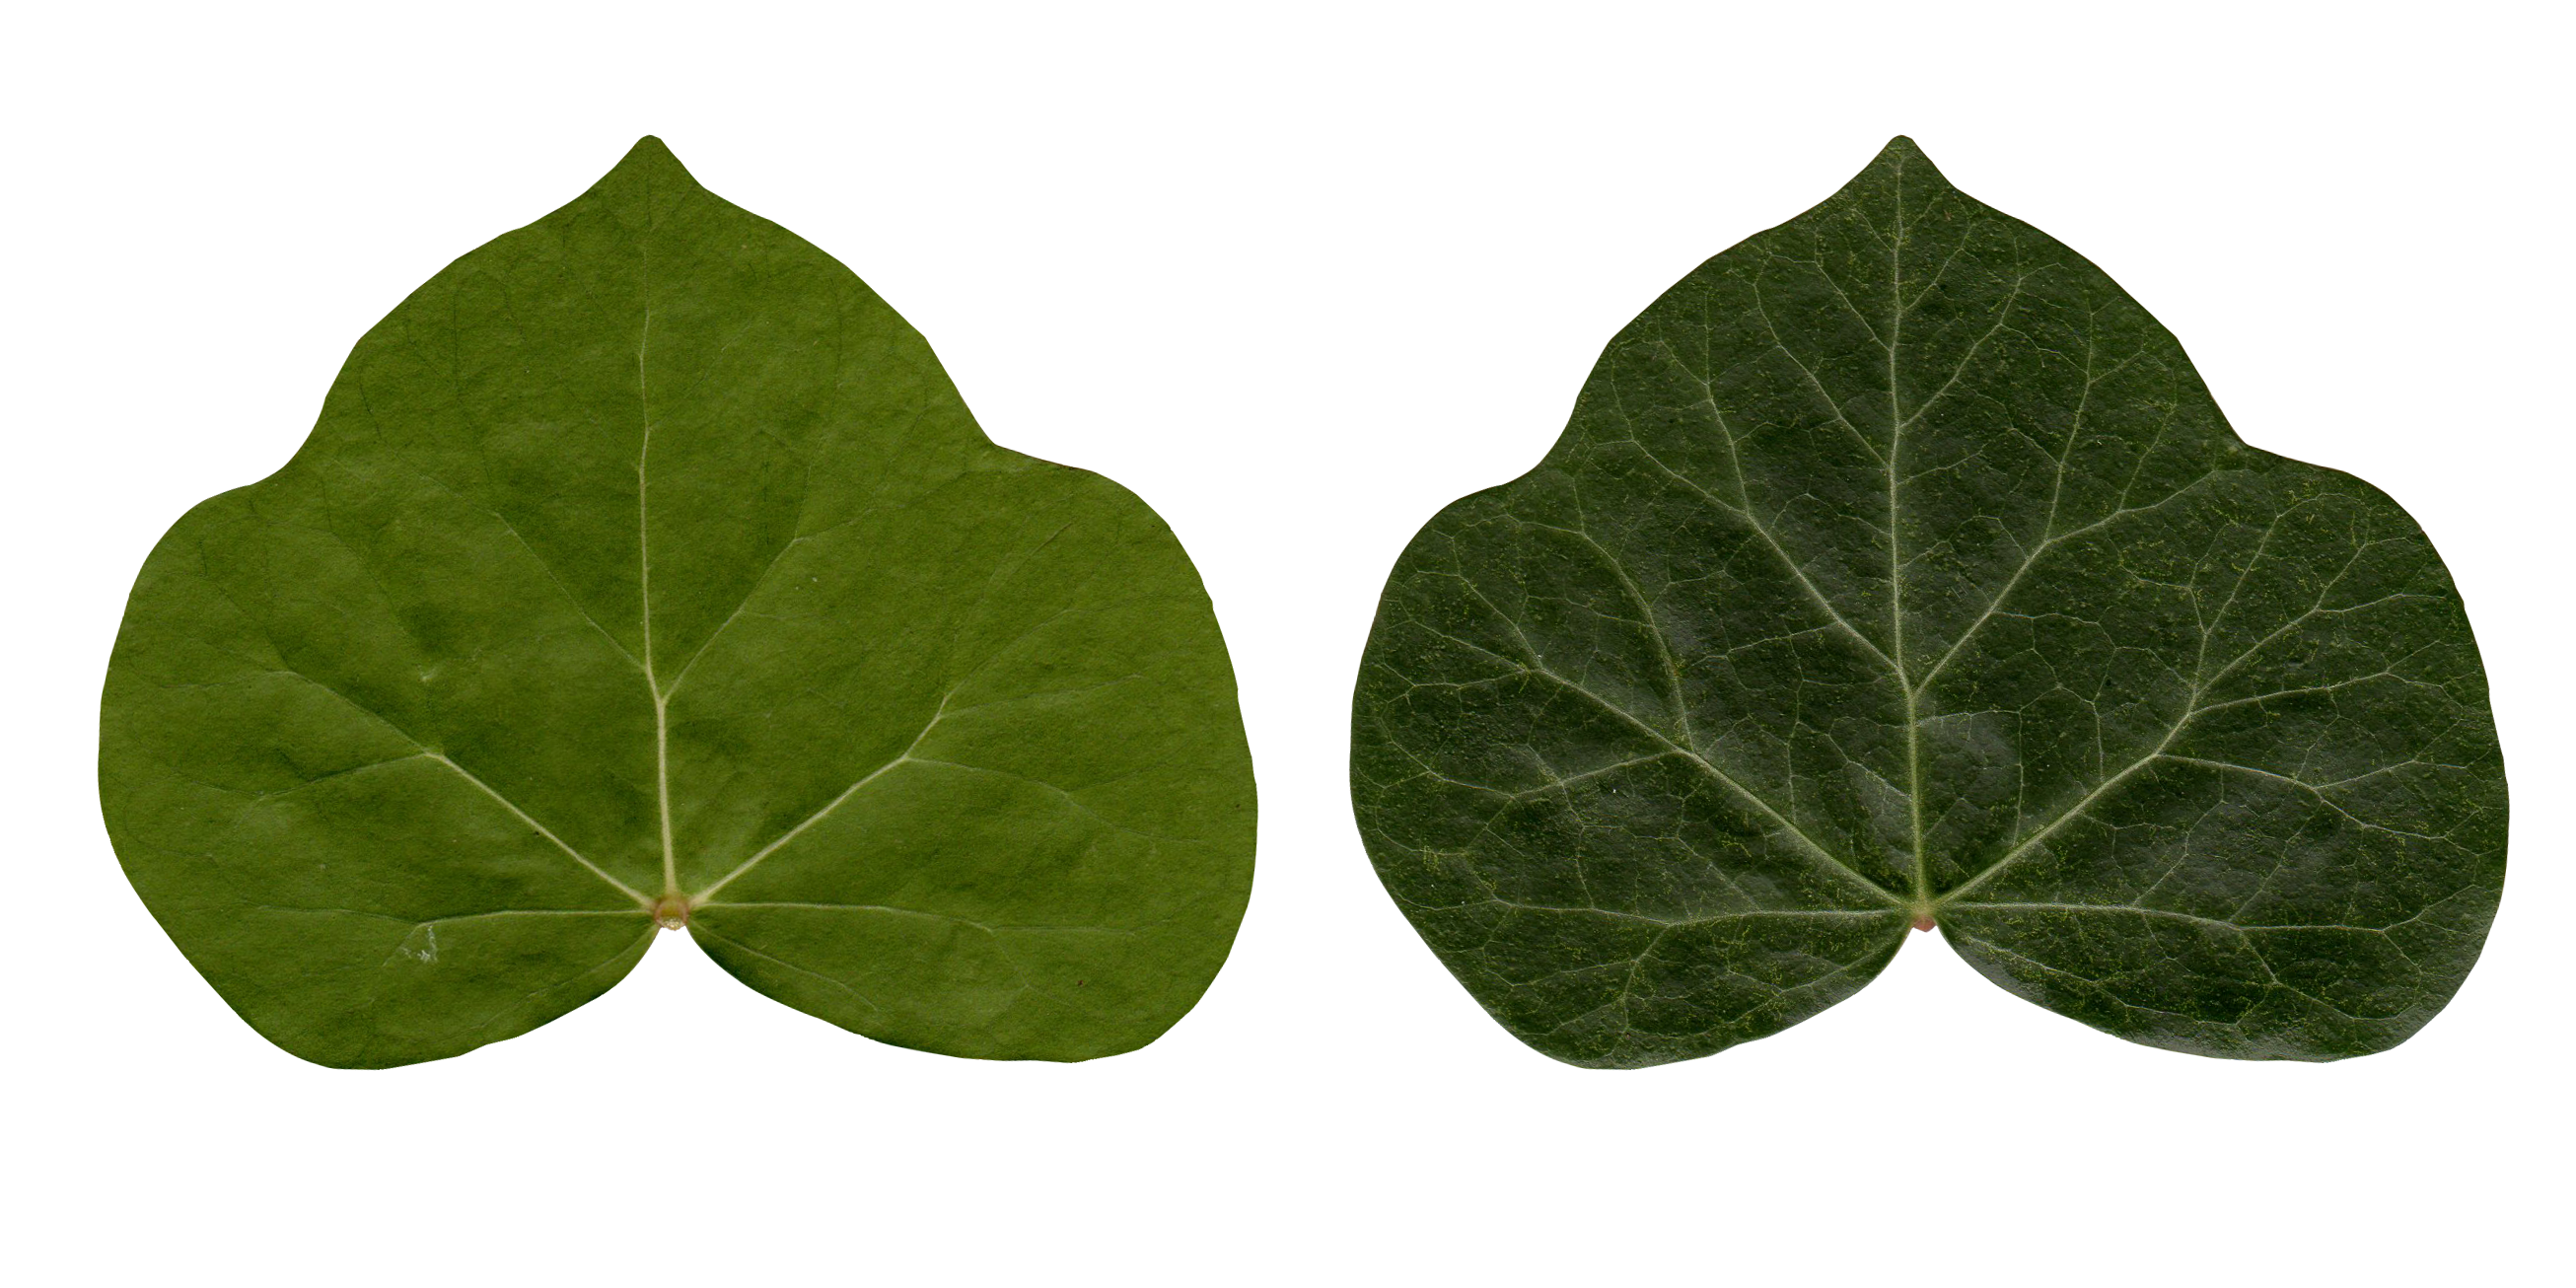 Ivy Leaves by RLVFX on DeviantArt